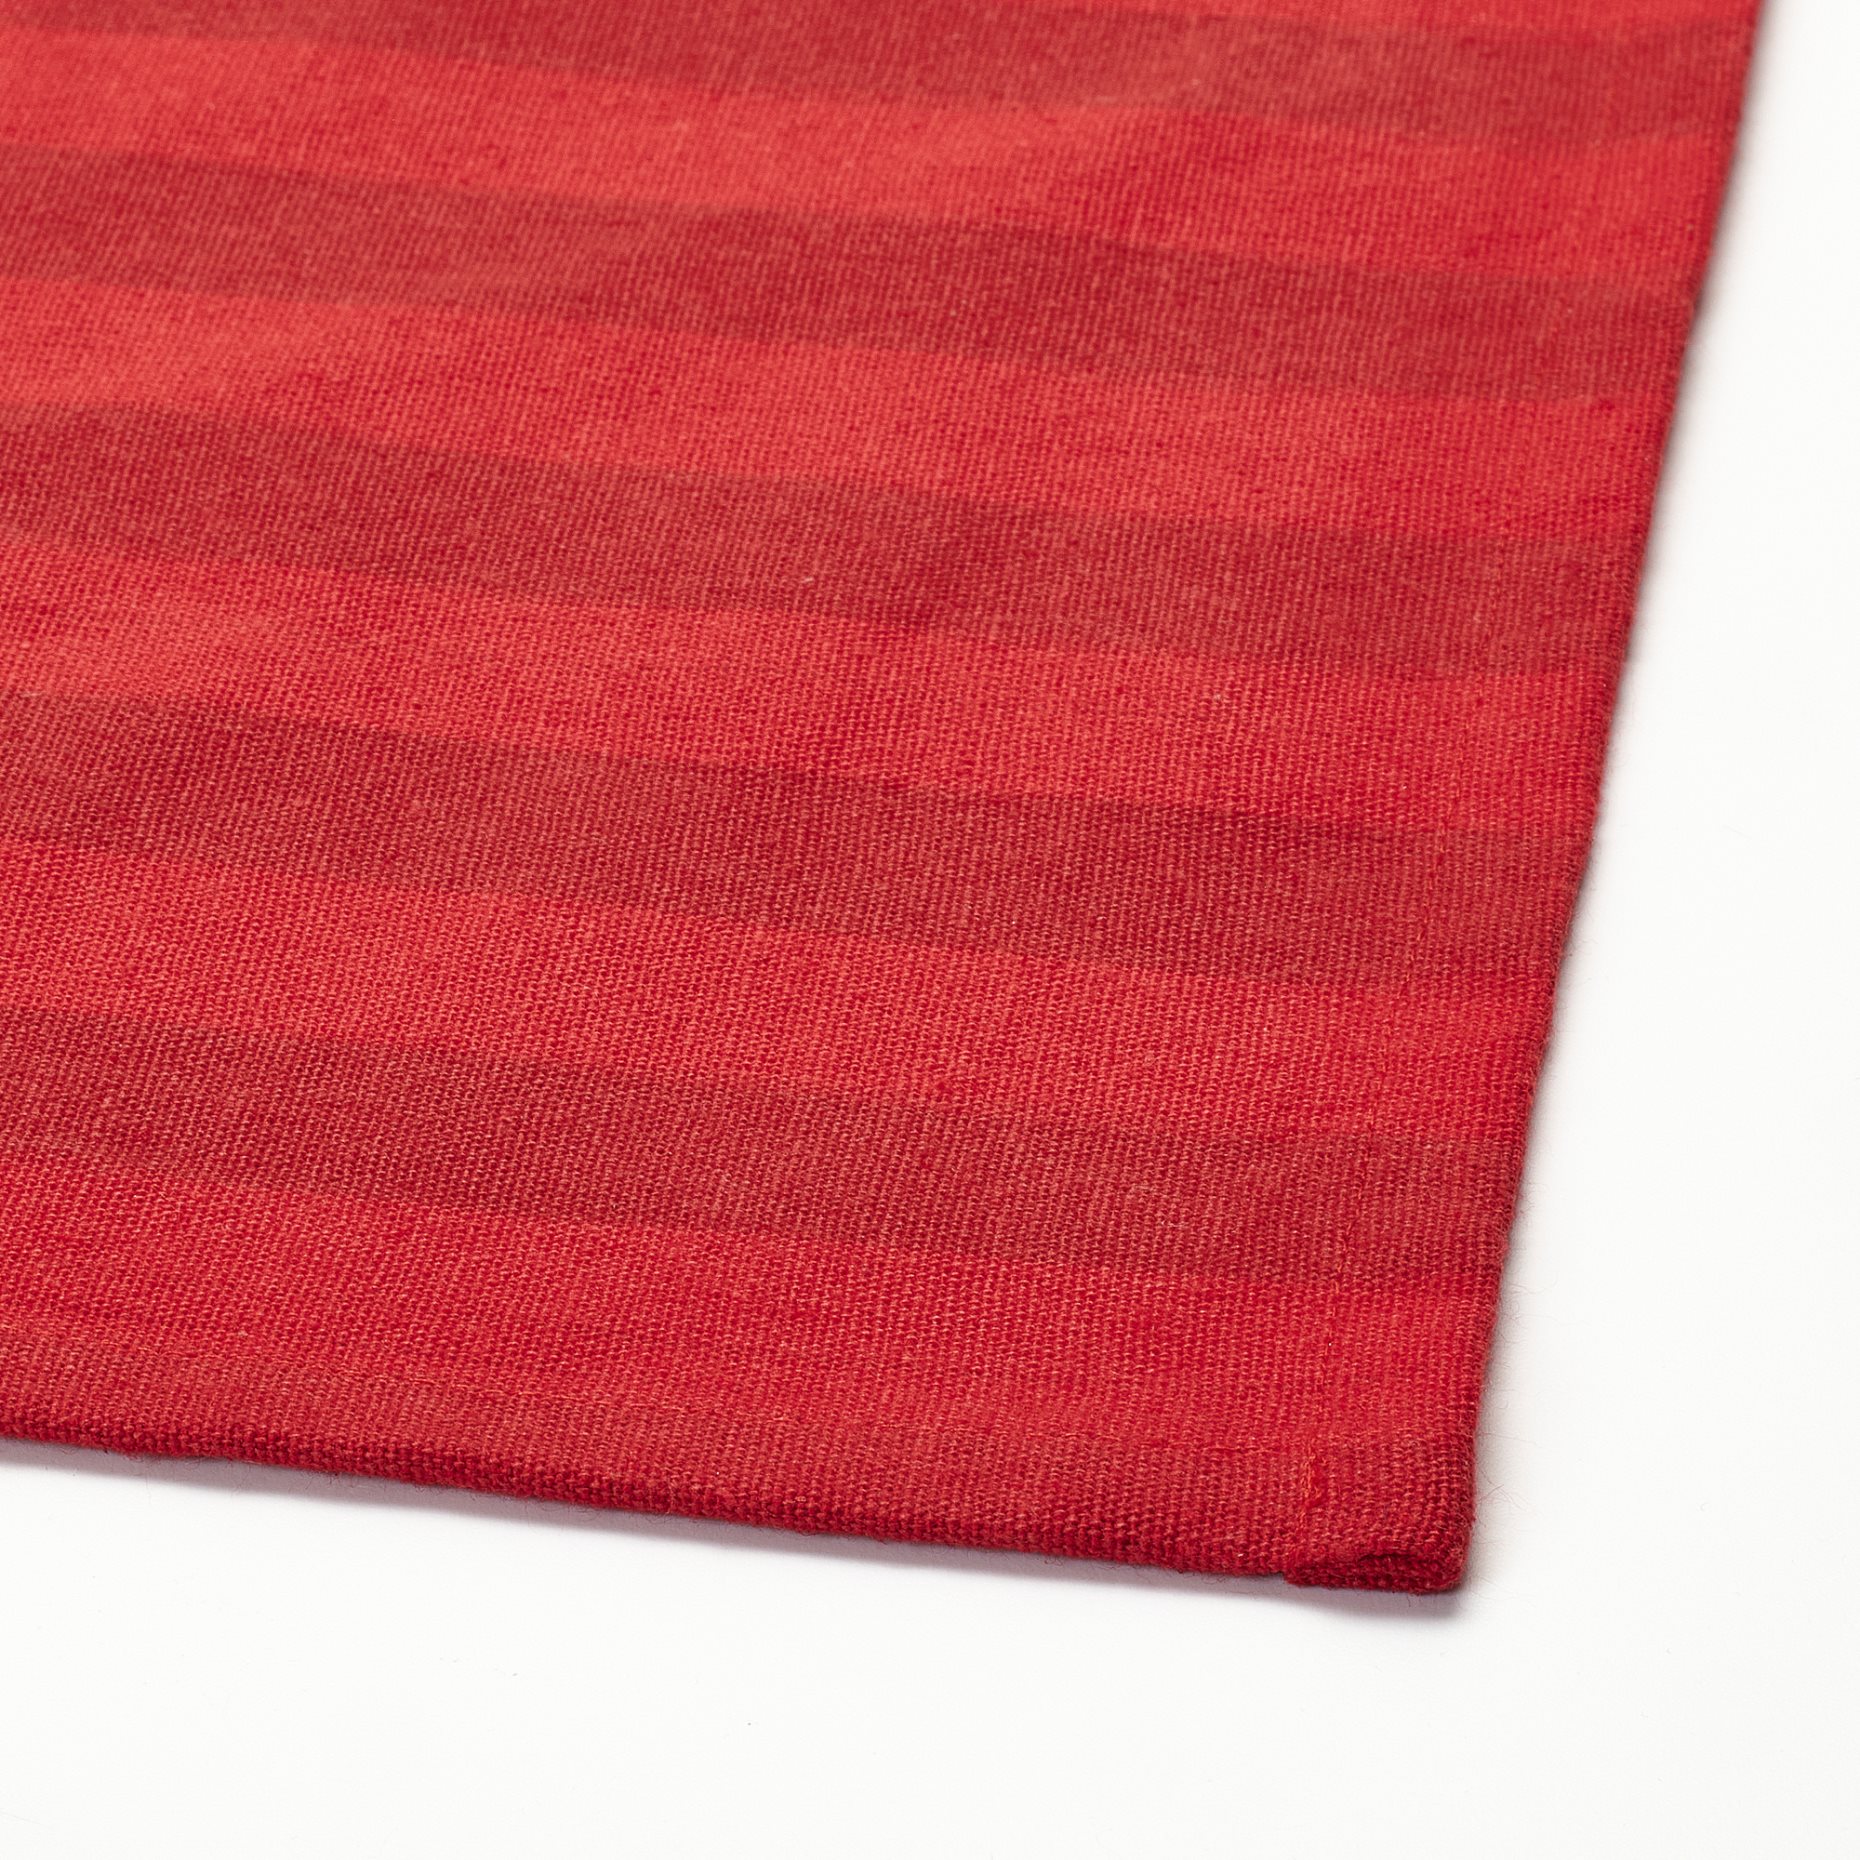 VINTERFINT, tablecloth stripe pattern, 145x320 cm, 605.599.24